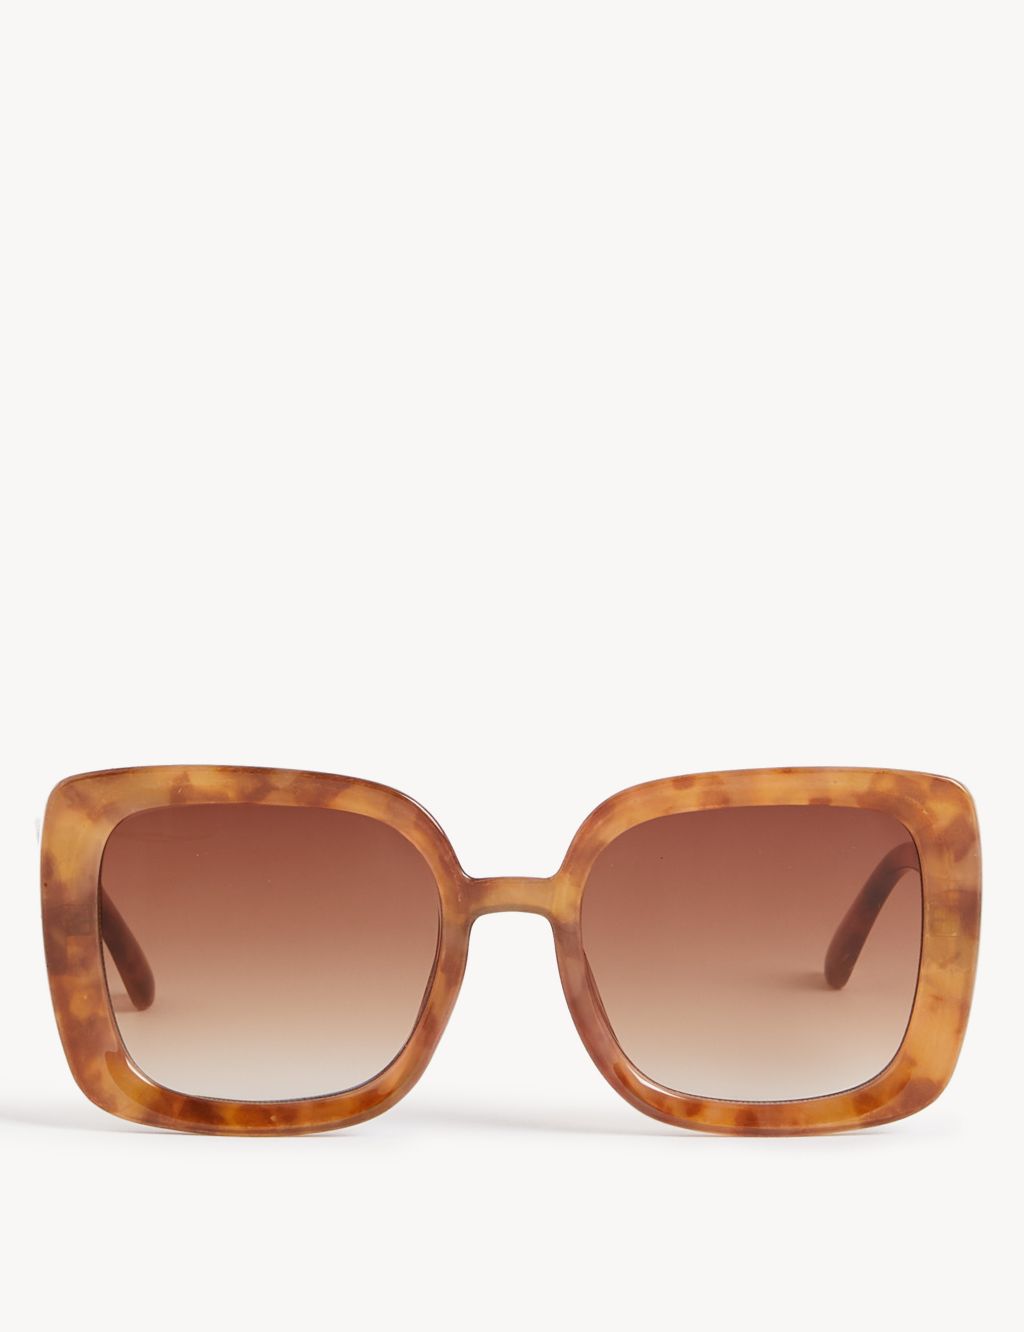 Angular Oversized Sunglasses image 1